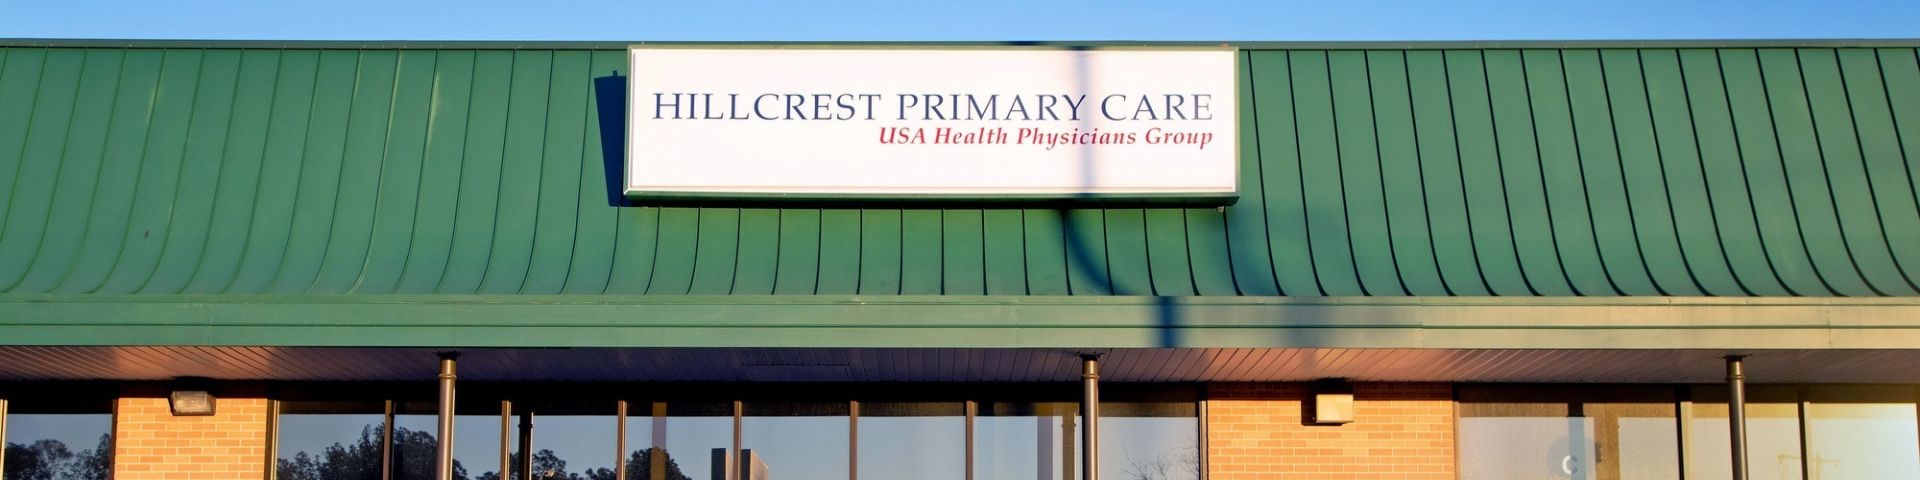 Hillcrest Primary Care